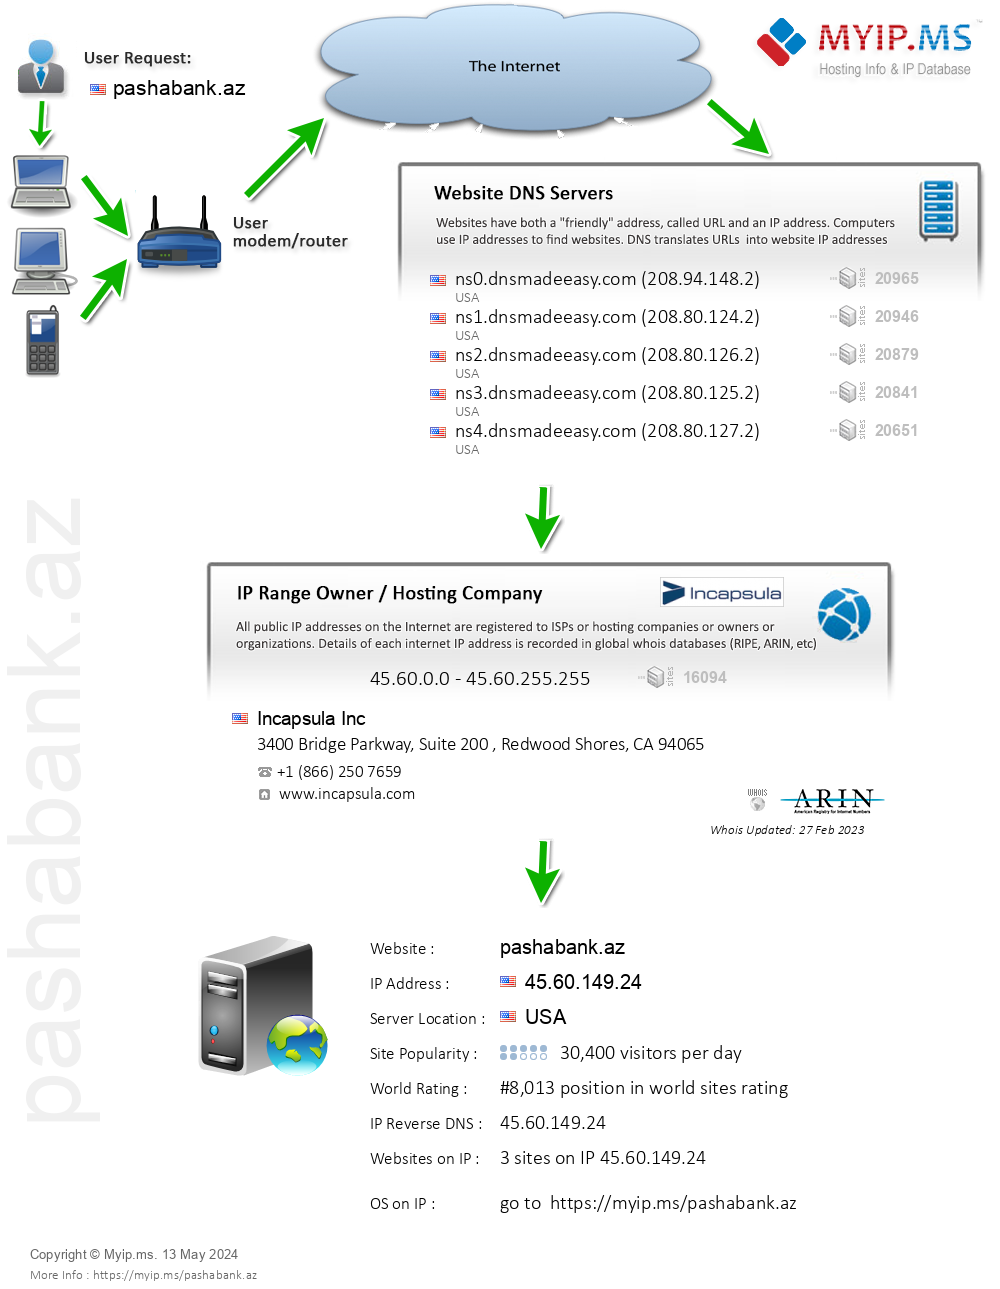 Pashabank.az - Website Hosting Visual IP Diagram